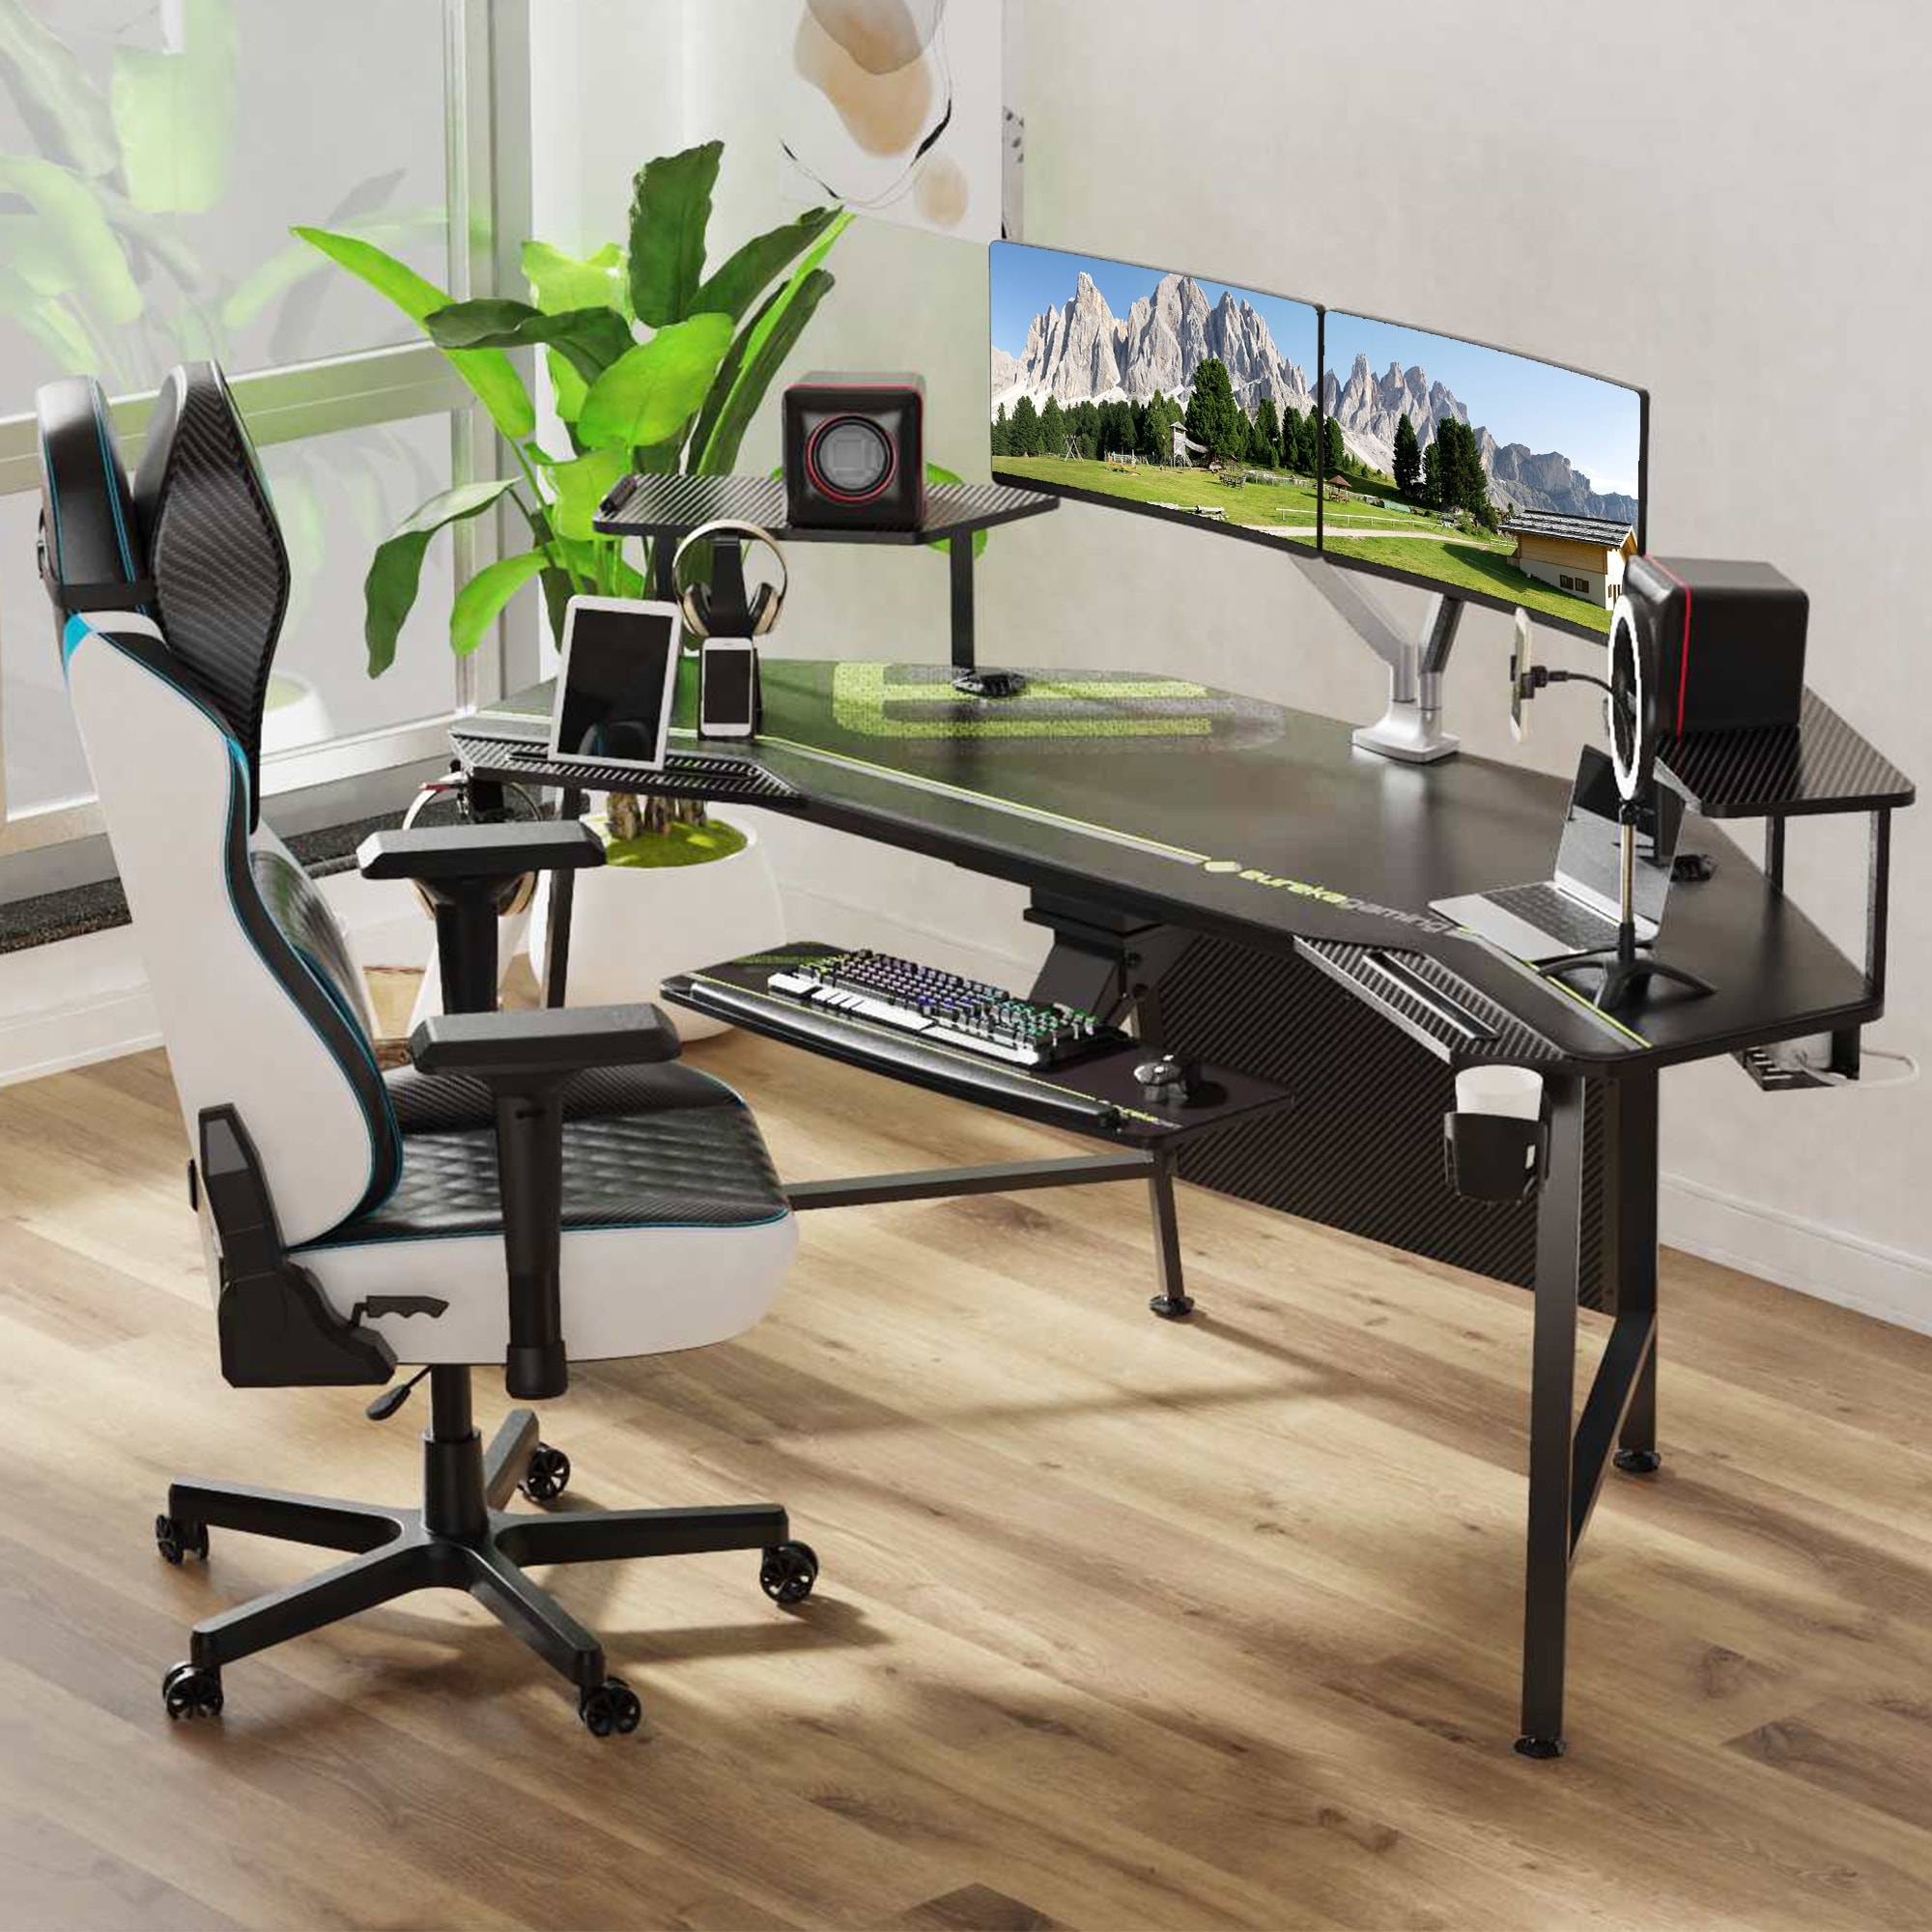 Eureka 72" Large Gaming Desk Multifunctional Computer Desk with Shelf & Keyboard Tray Black